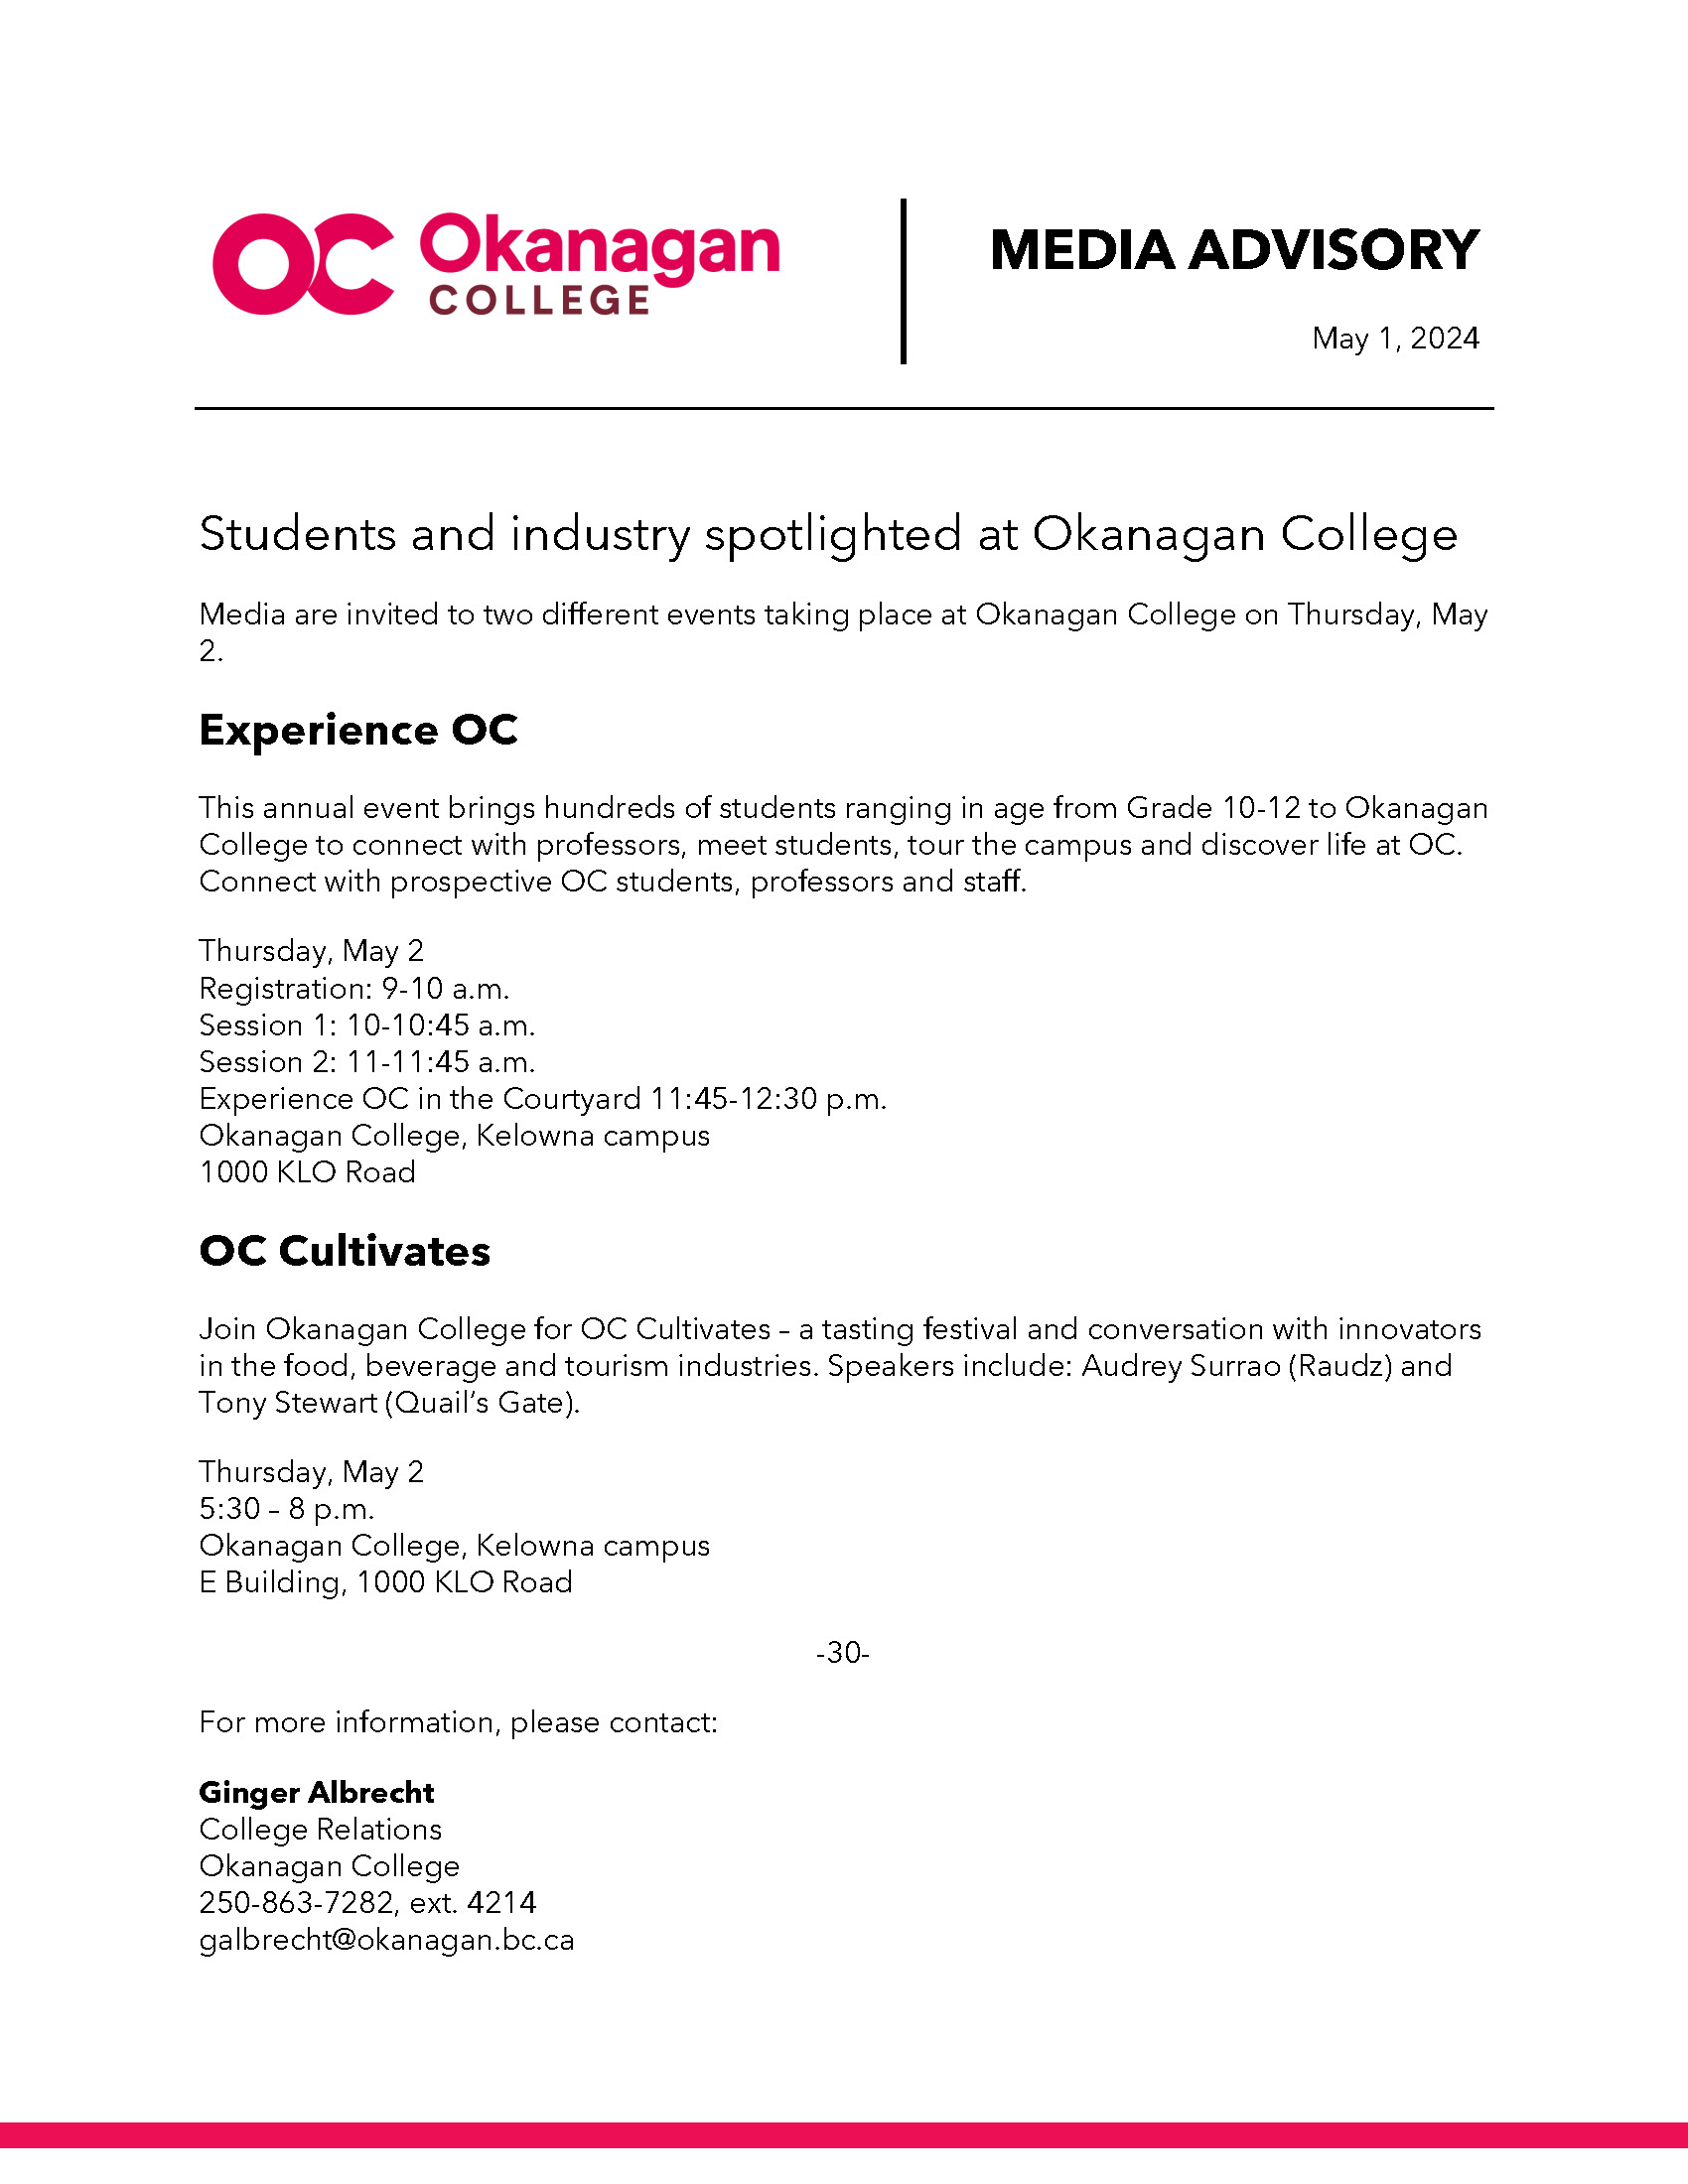 Upcoming Okanagan College events